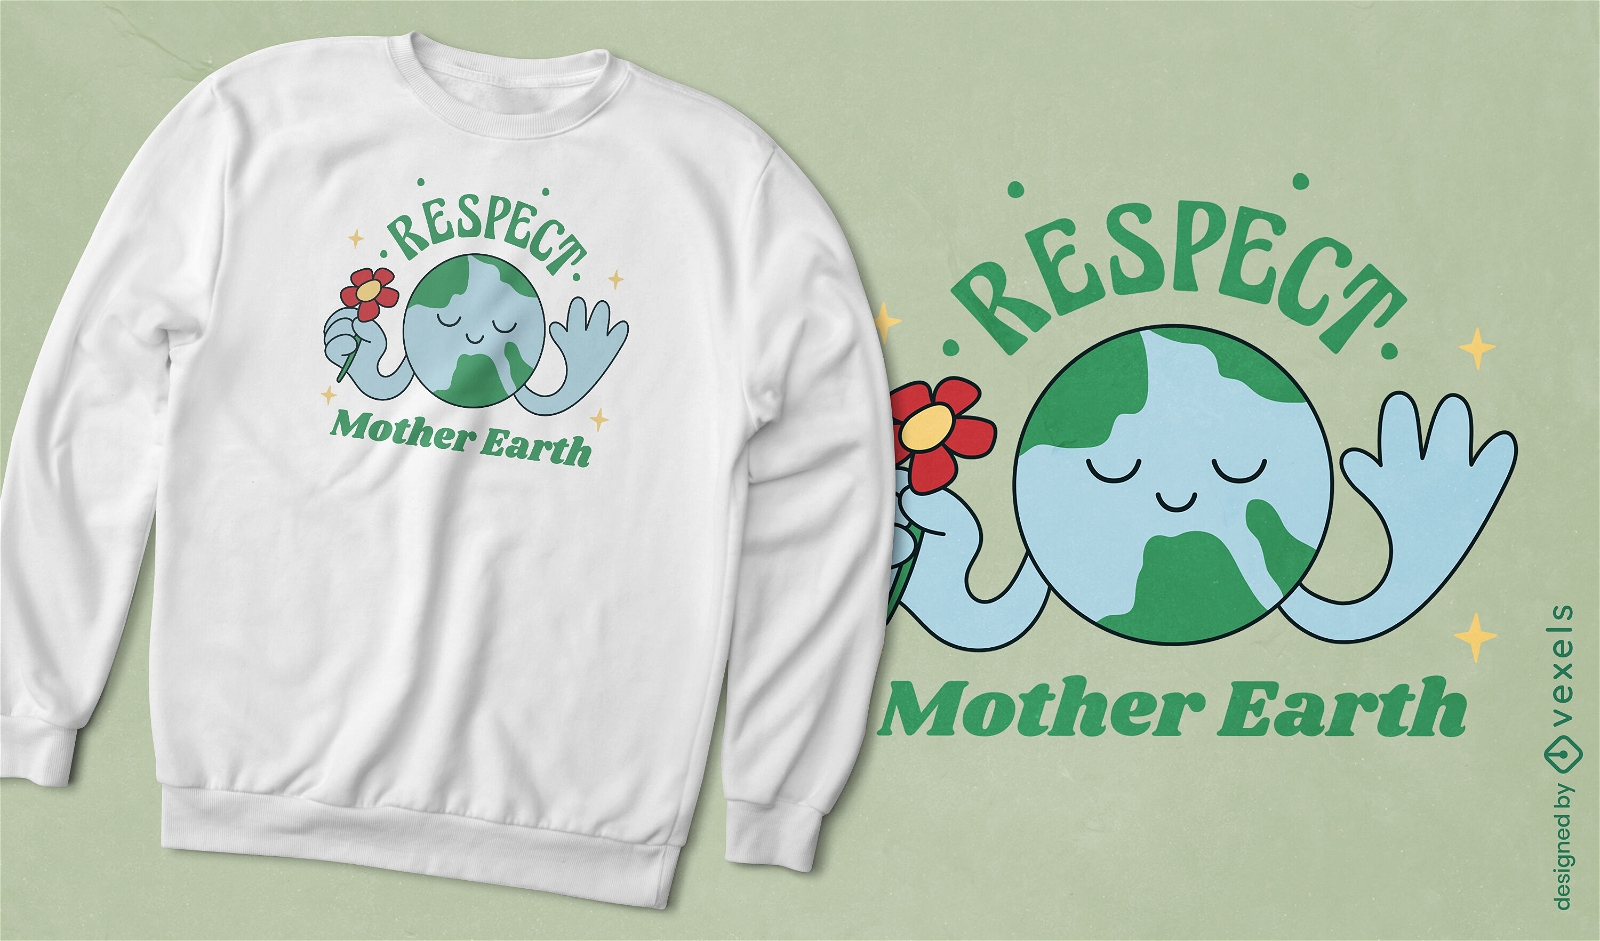 Respect Mother Earth t-shirt design